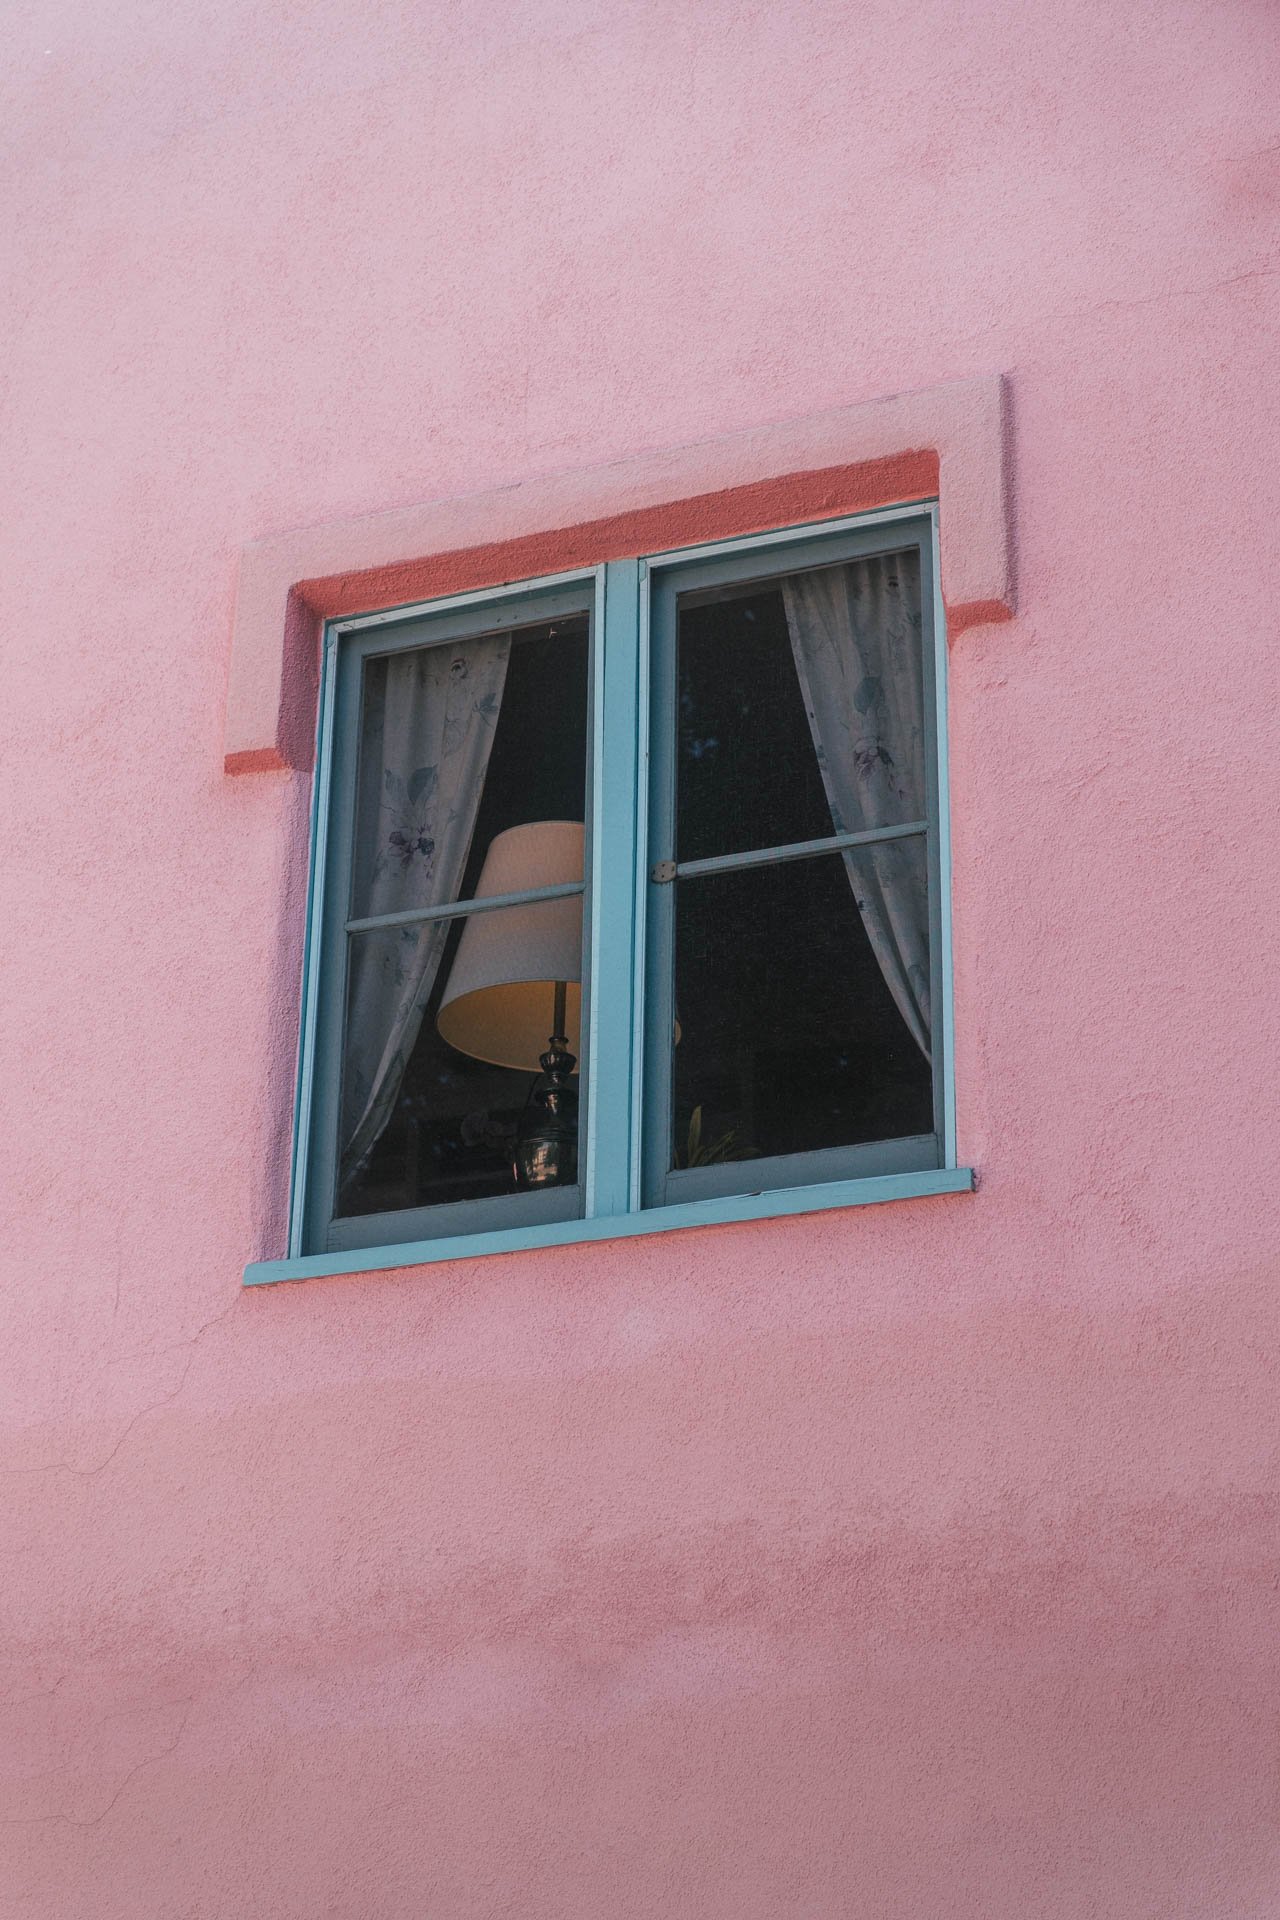 Lamp-in-Window-in-Santa-Monica.jpg